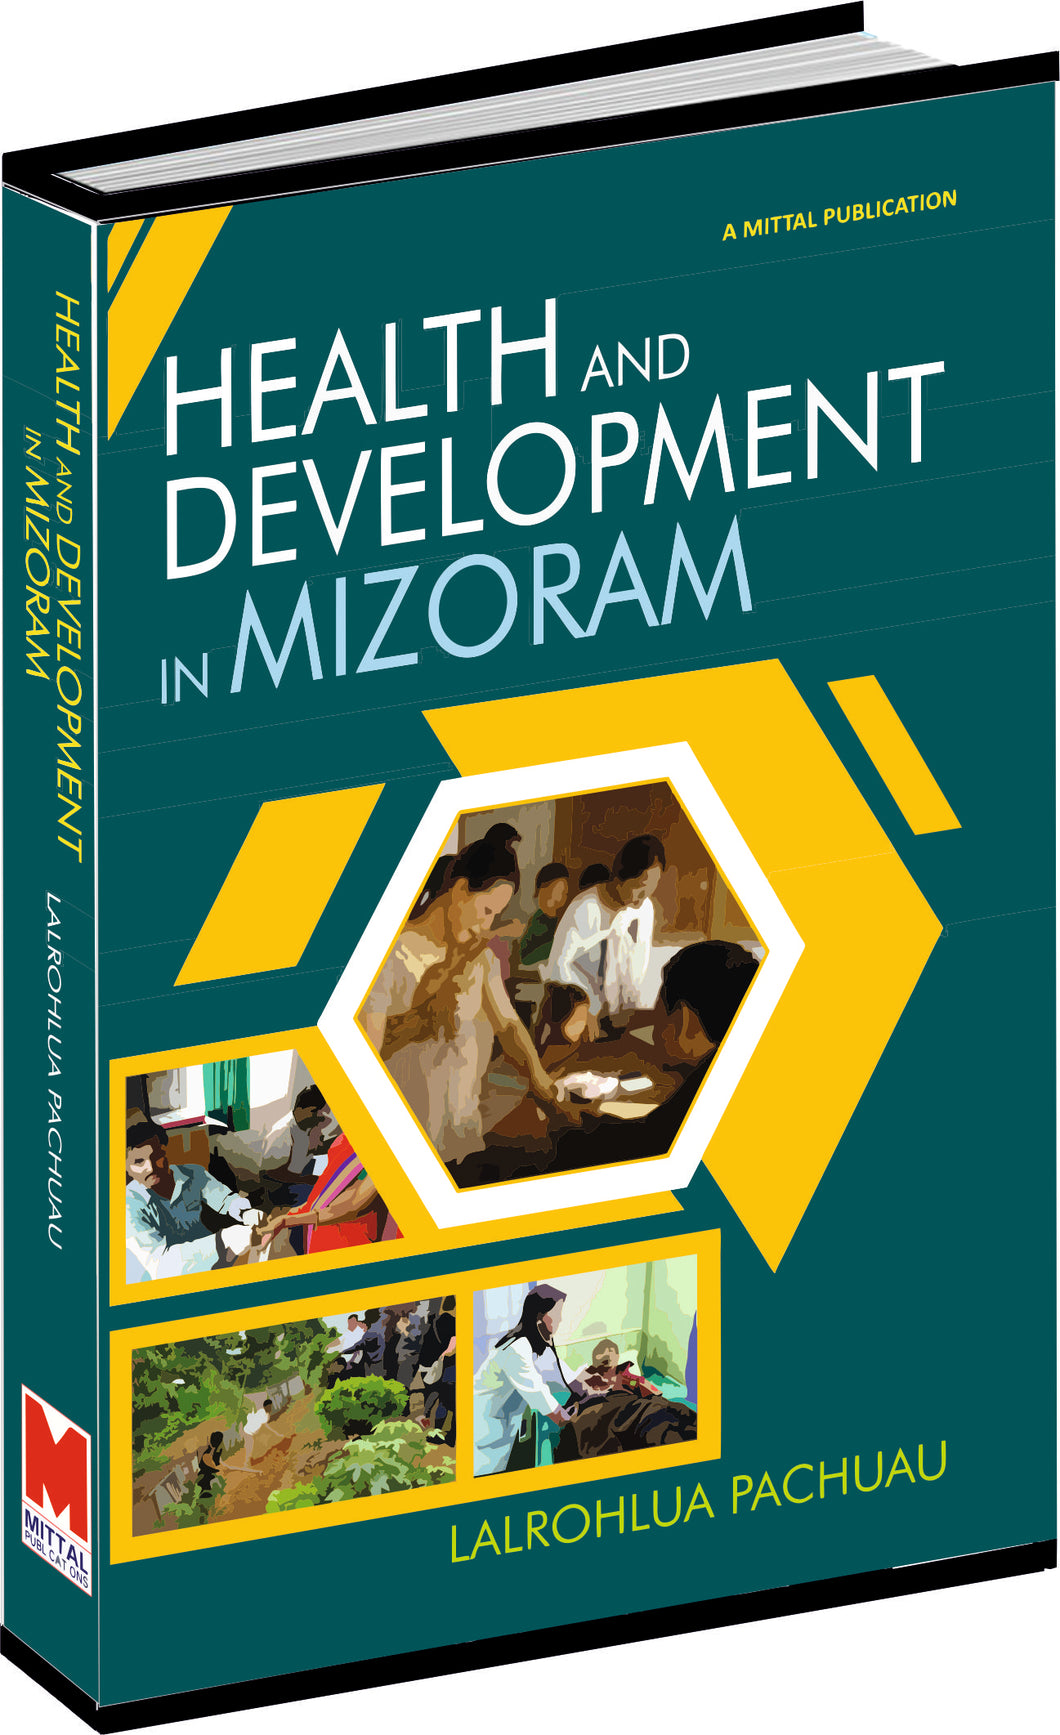 Health and Development in Mizoram